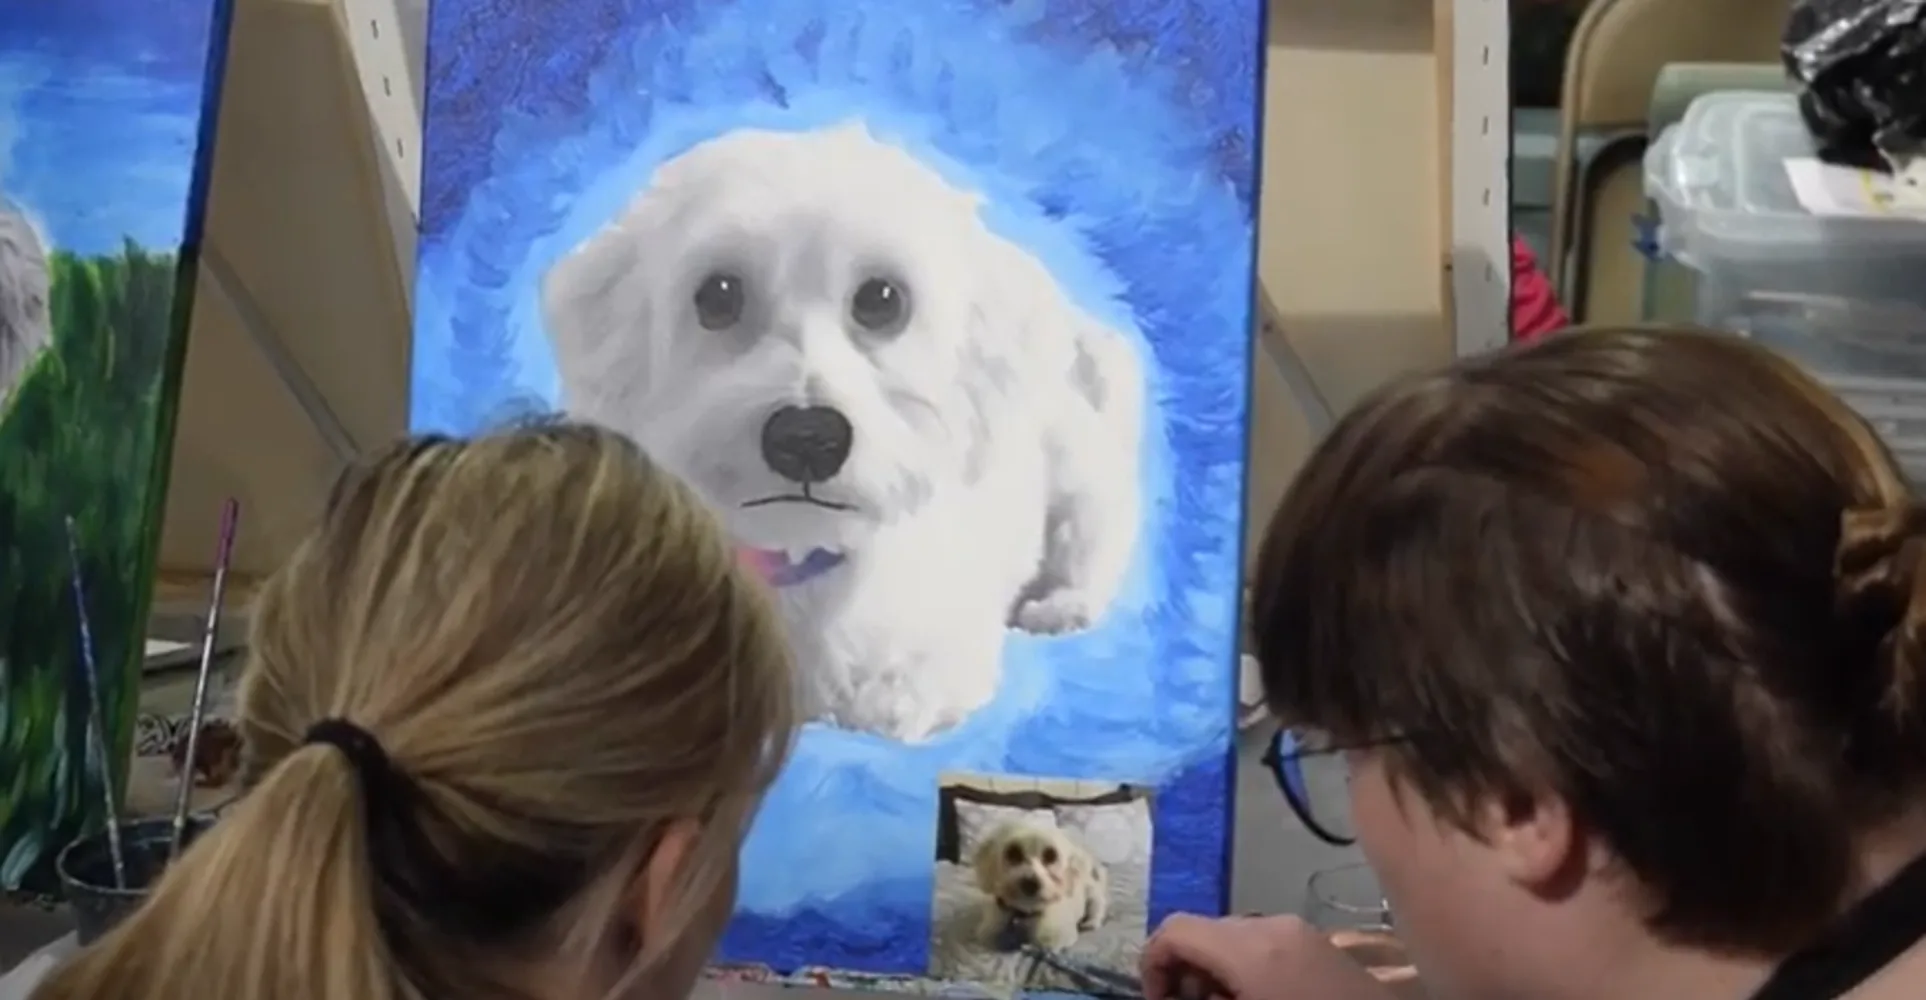 A portrait of a dog